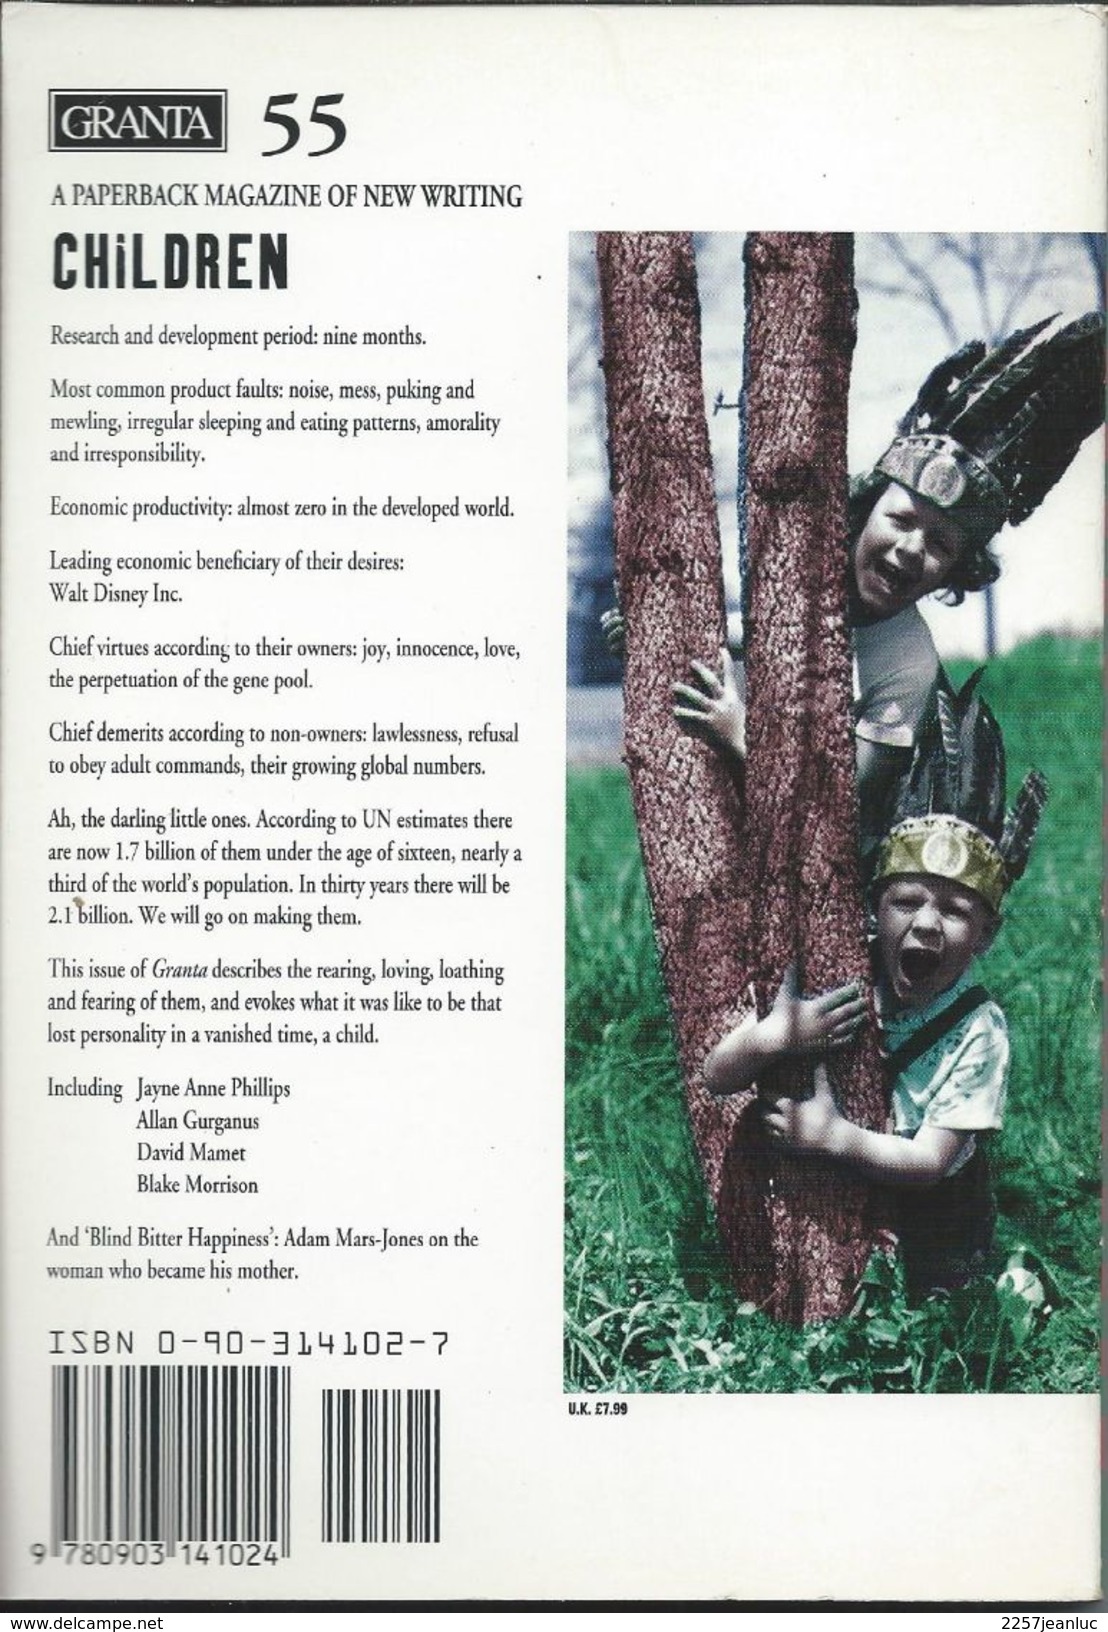 The Magazine Granta 55 - Children Blind Bitter Happiness - Culture